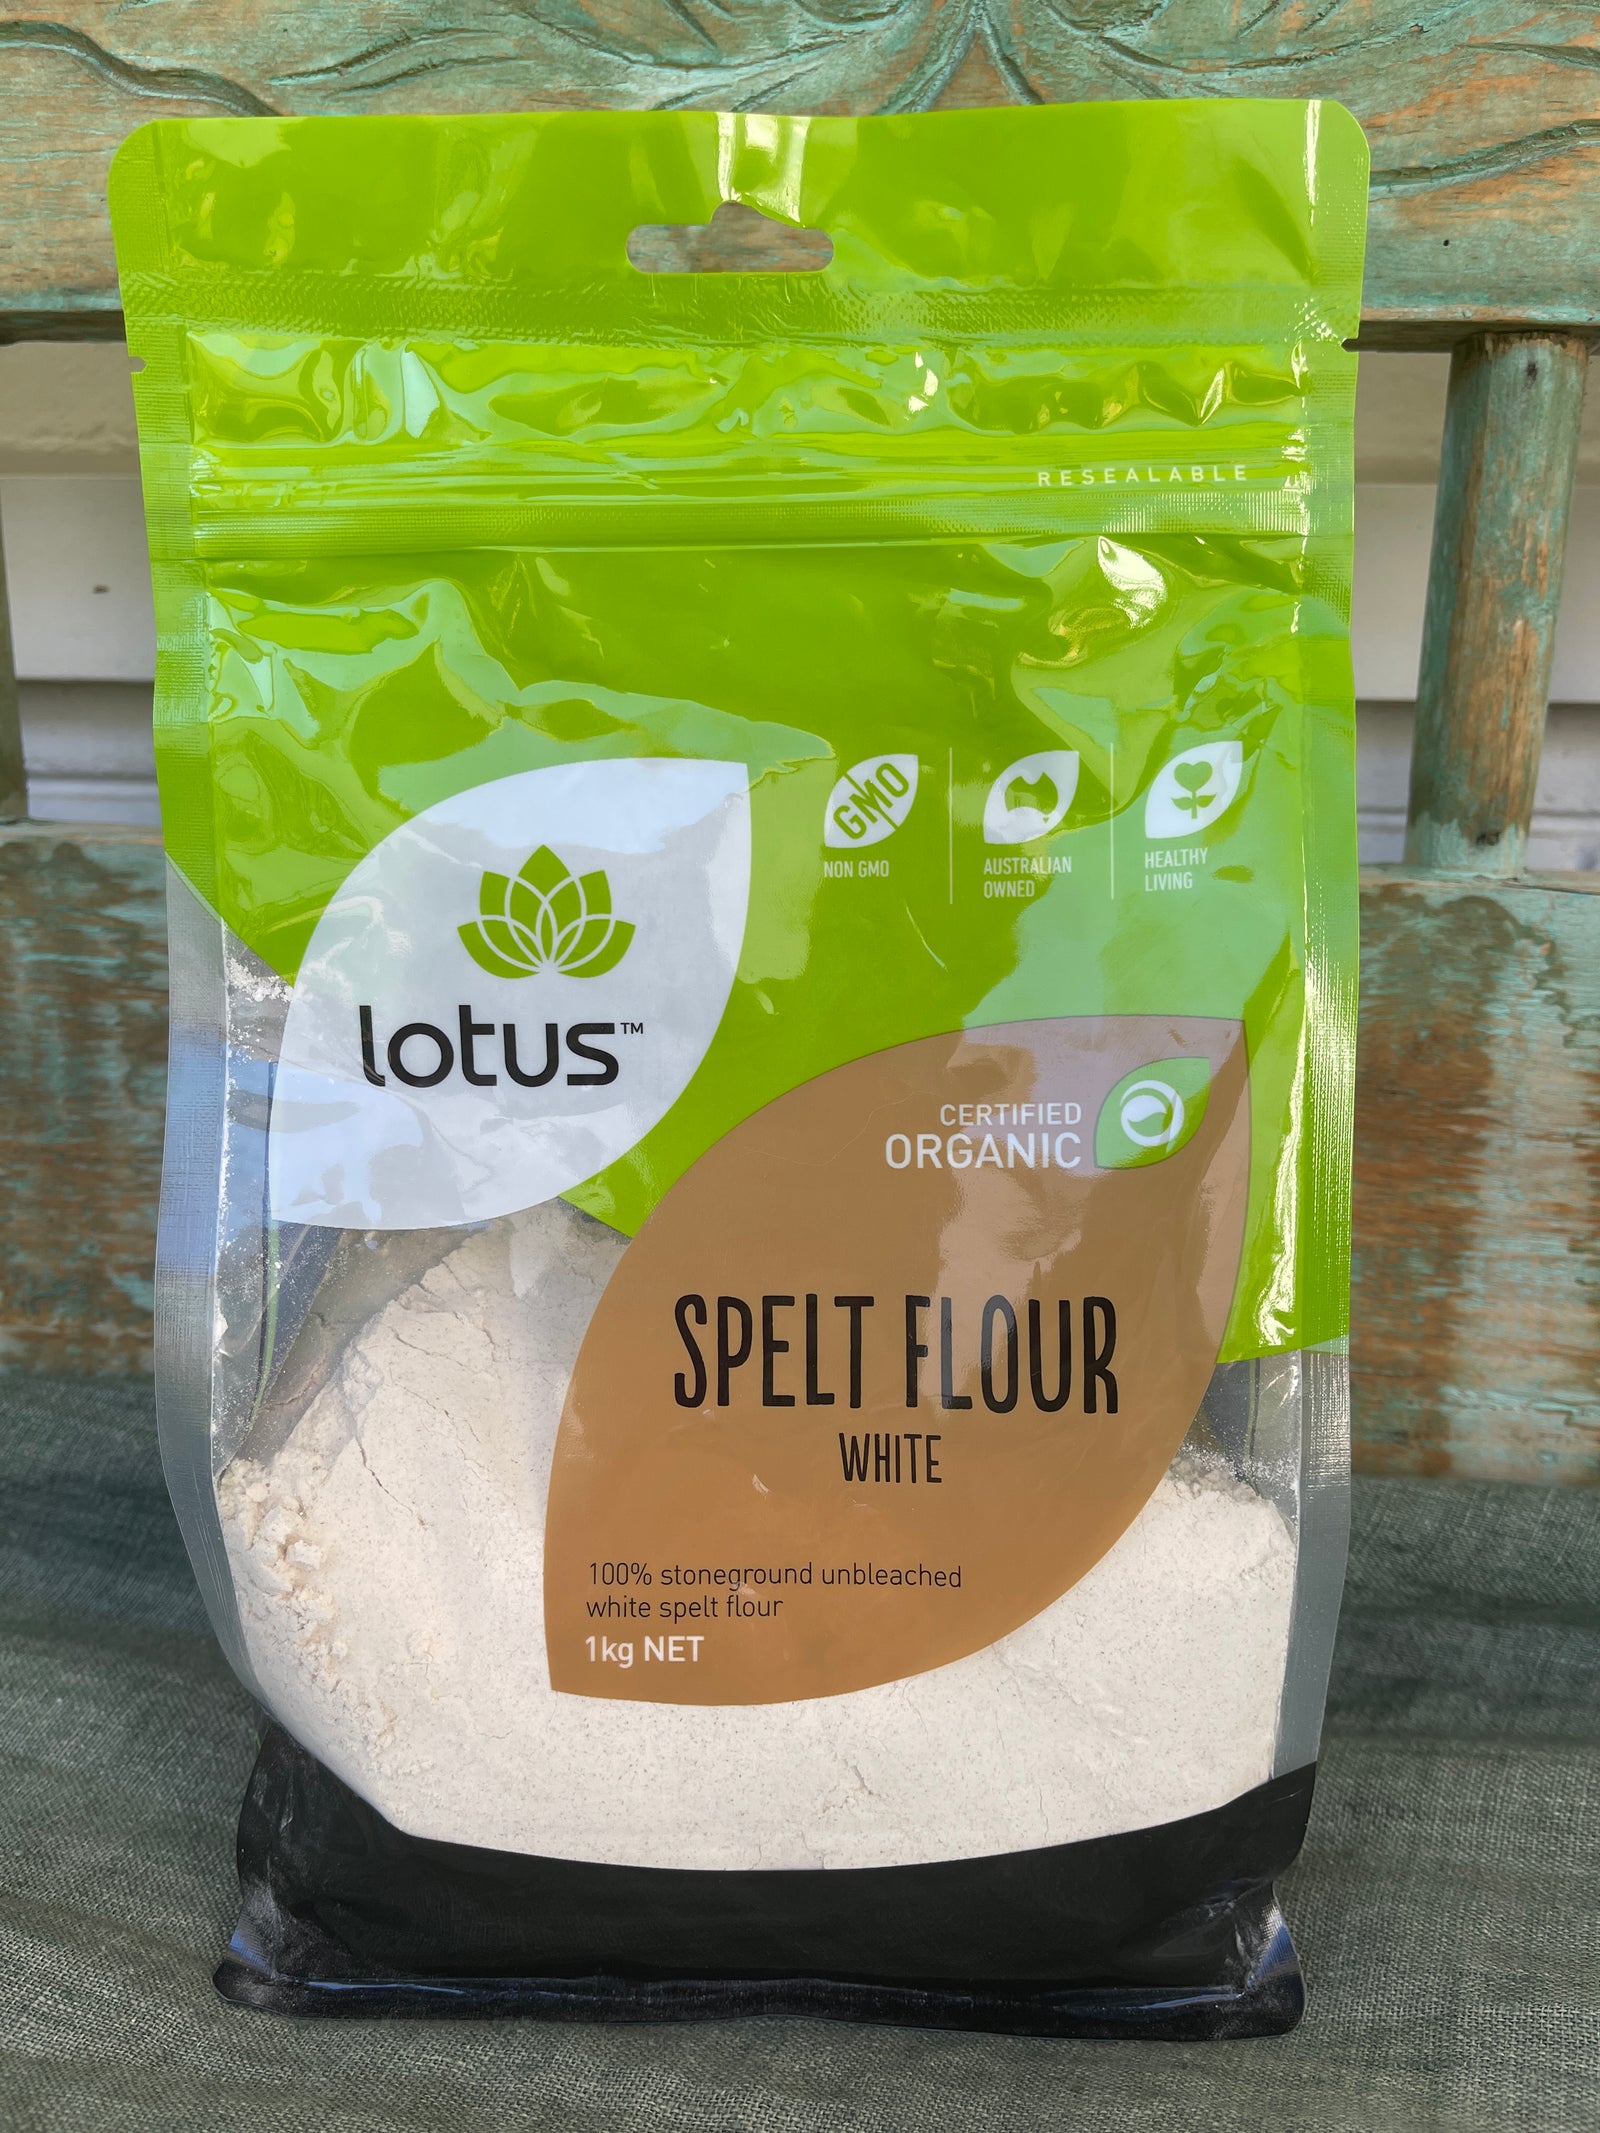 Lotus Spelt Flour 1kg